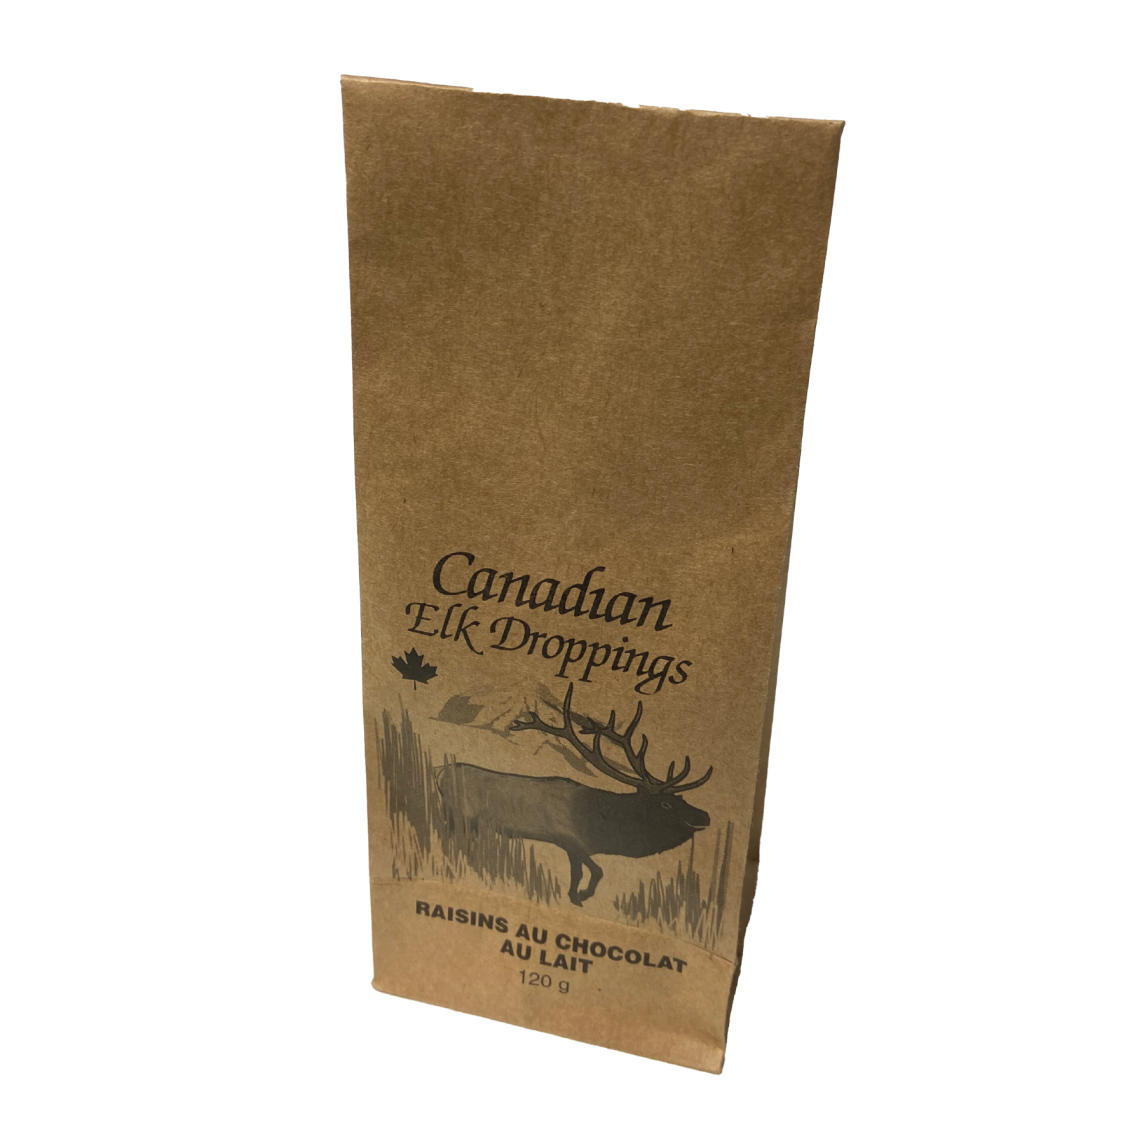 Canada True Canadian Elk Droppings